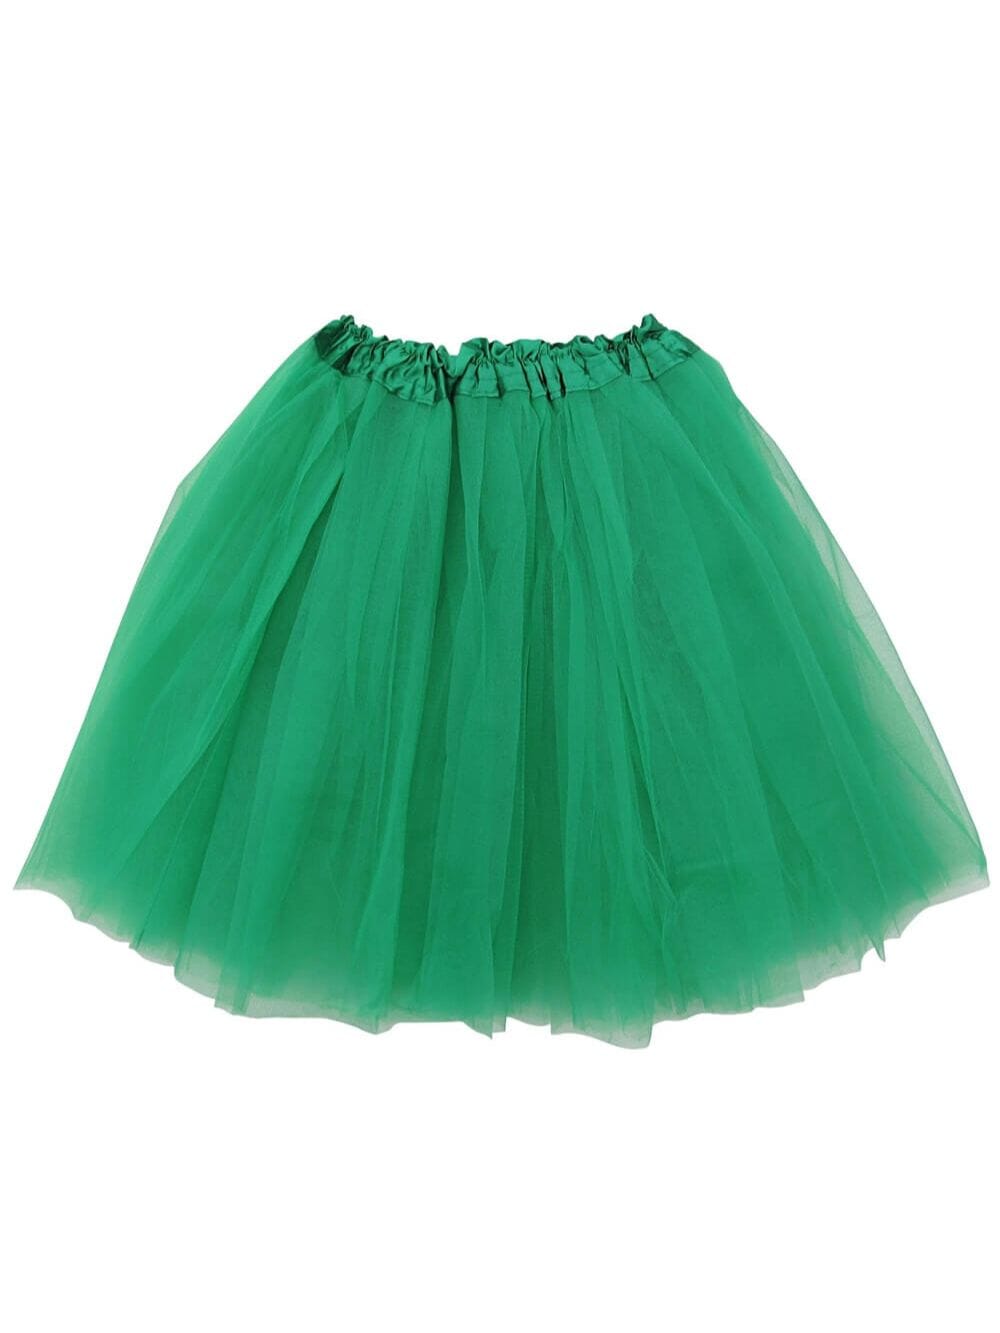 Green Plus Size Adult Tutu Skirt - Women's Plus Size 3- Layer Basic Ballet Costume Dance Tutus - Sydney So Sweet